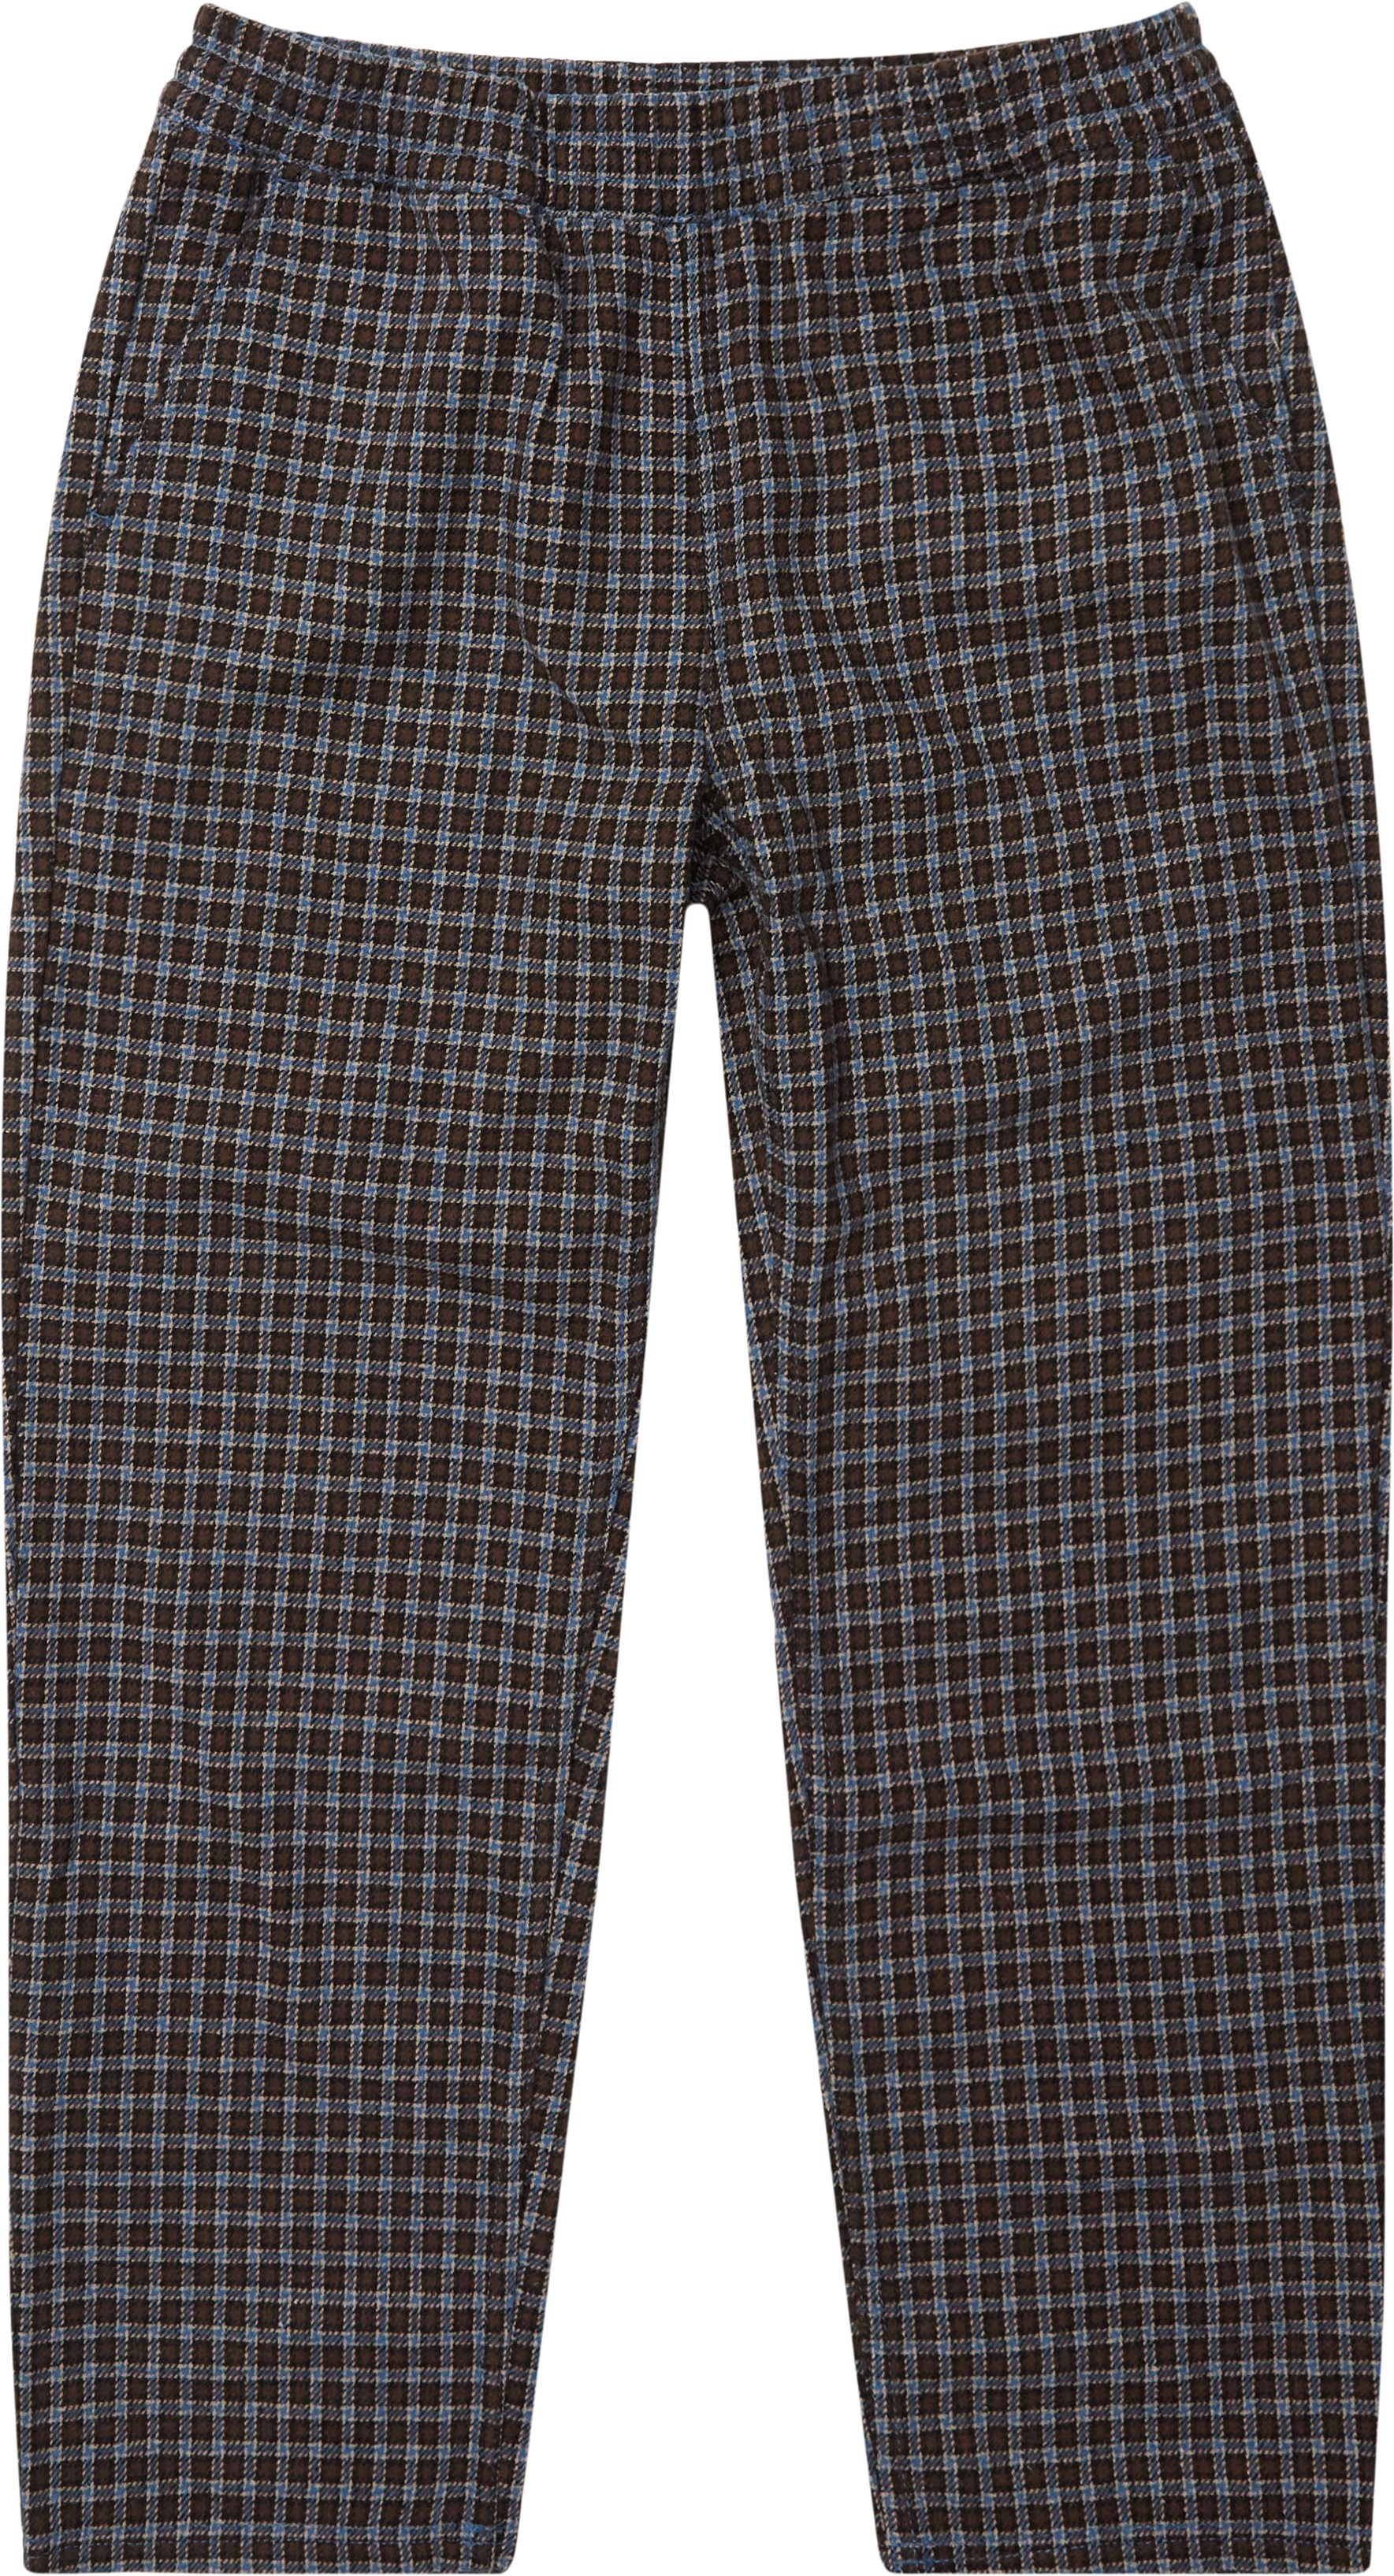 Plaid Pants - Trousers - Loose fit - Brown